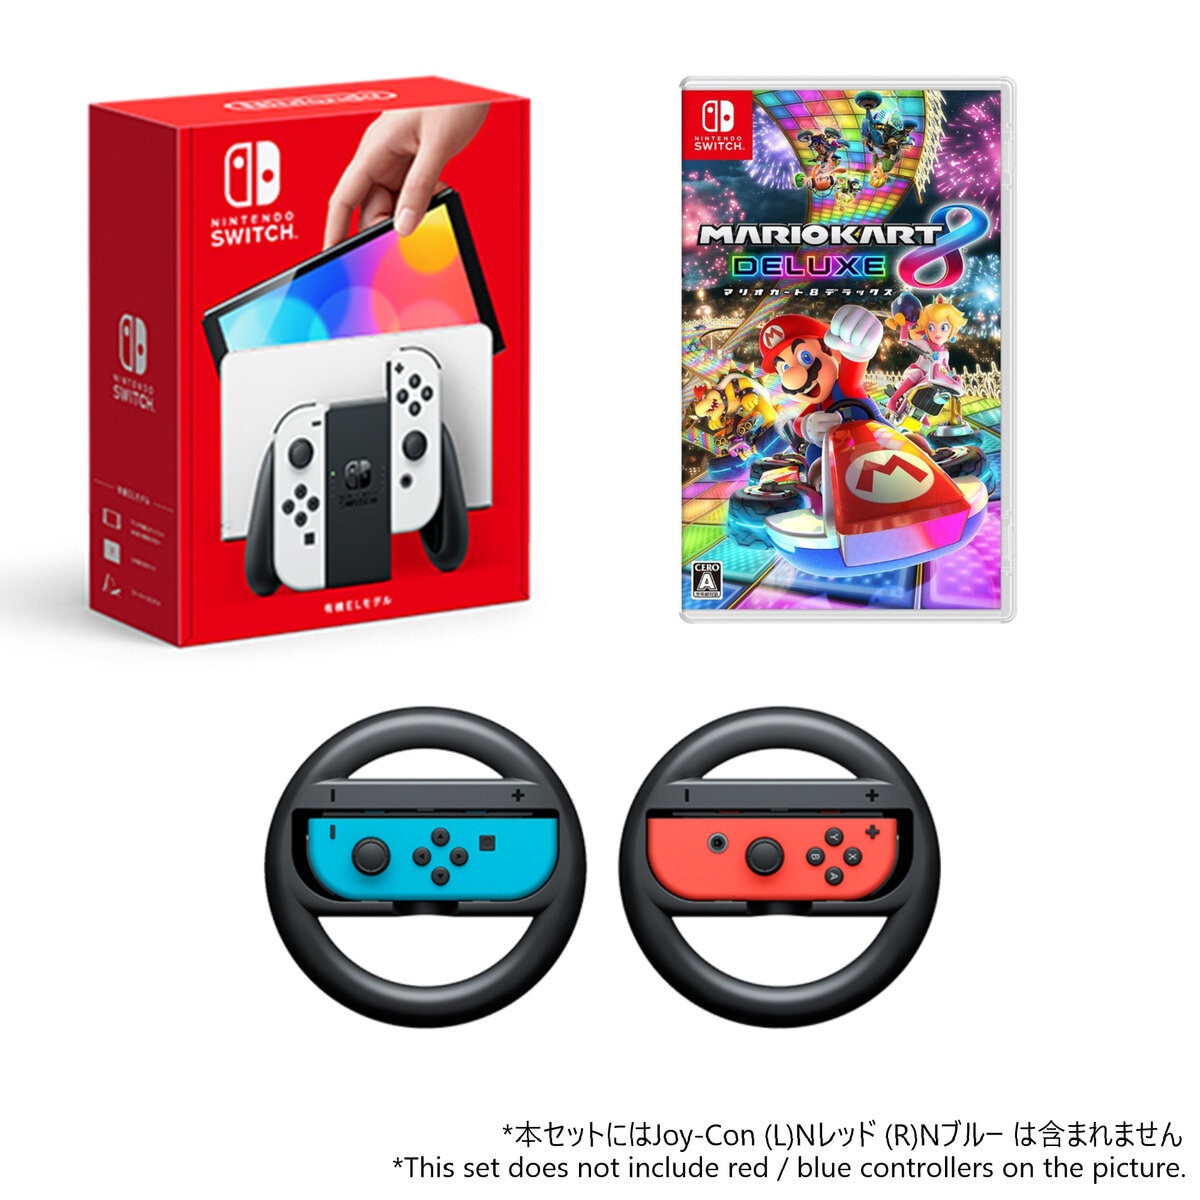 Nintendo Switch コストコオリジナルセット | Costco Japan